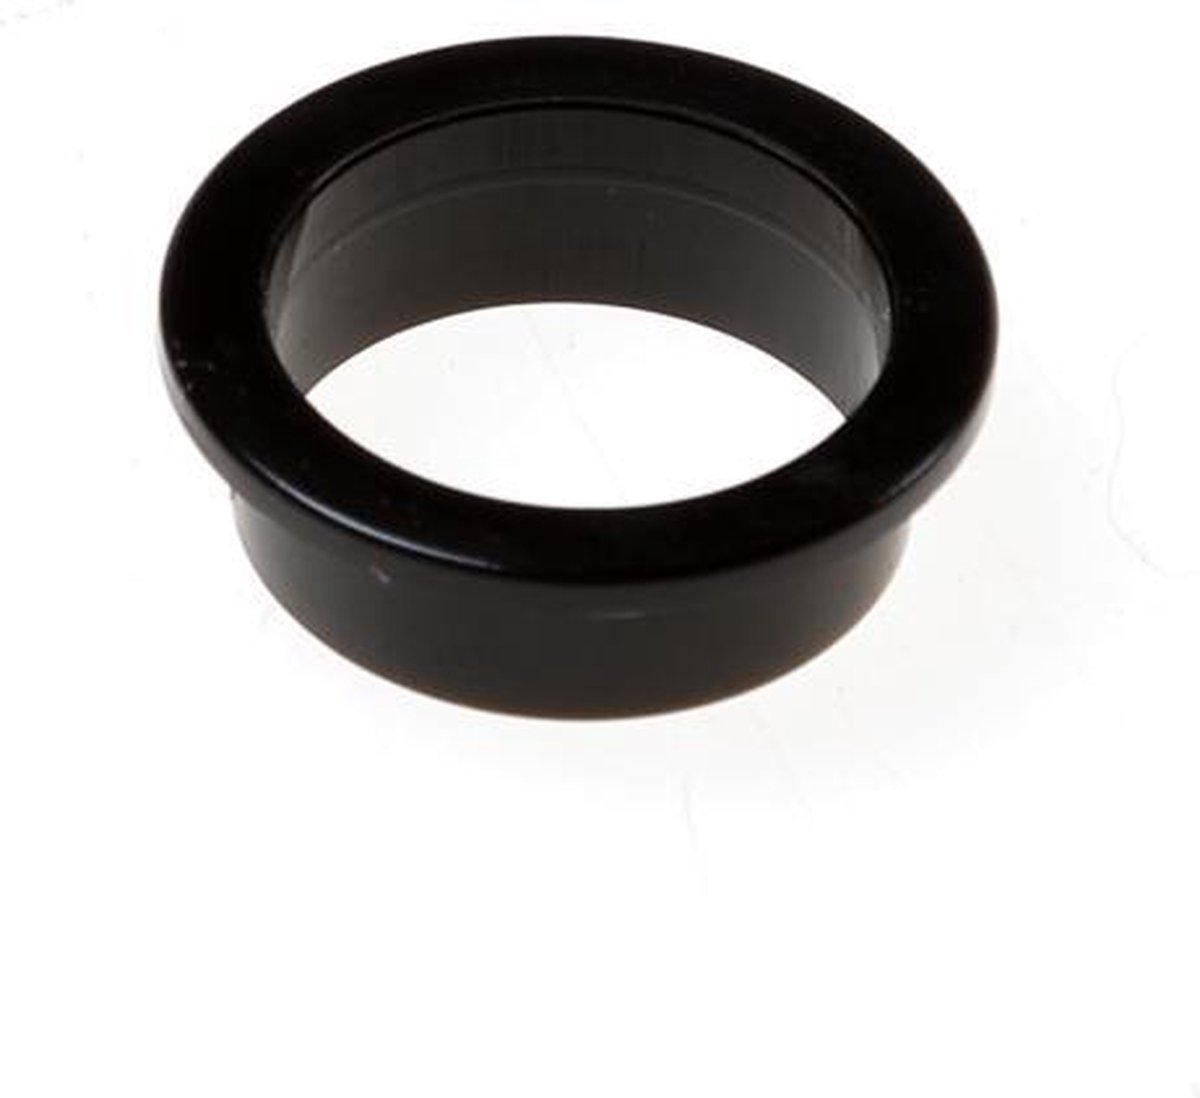 Ami nylon krukring zwart buitenmaat 25mm - binnenmaat 17mm | bol.com